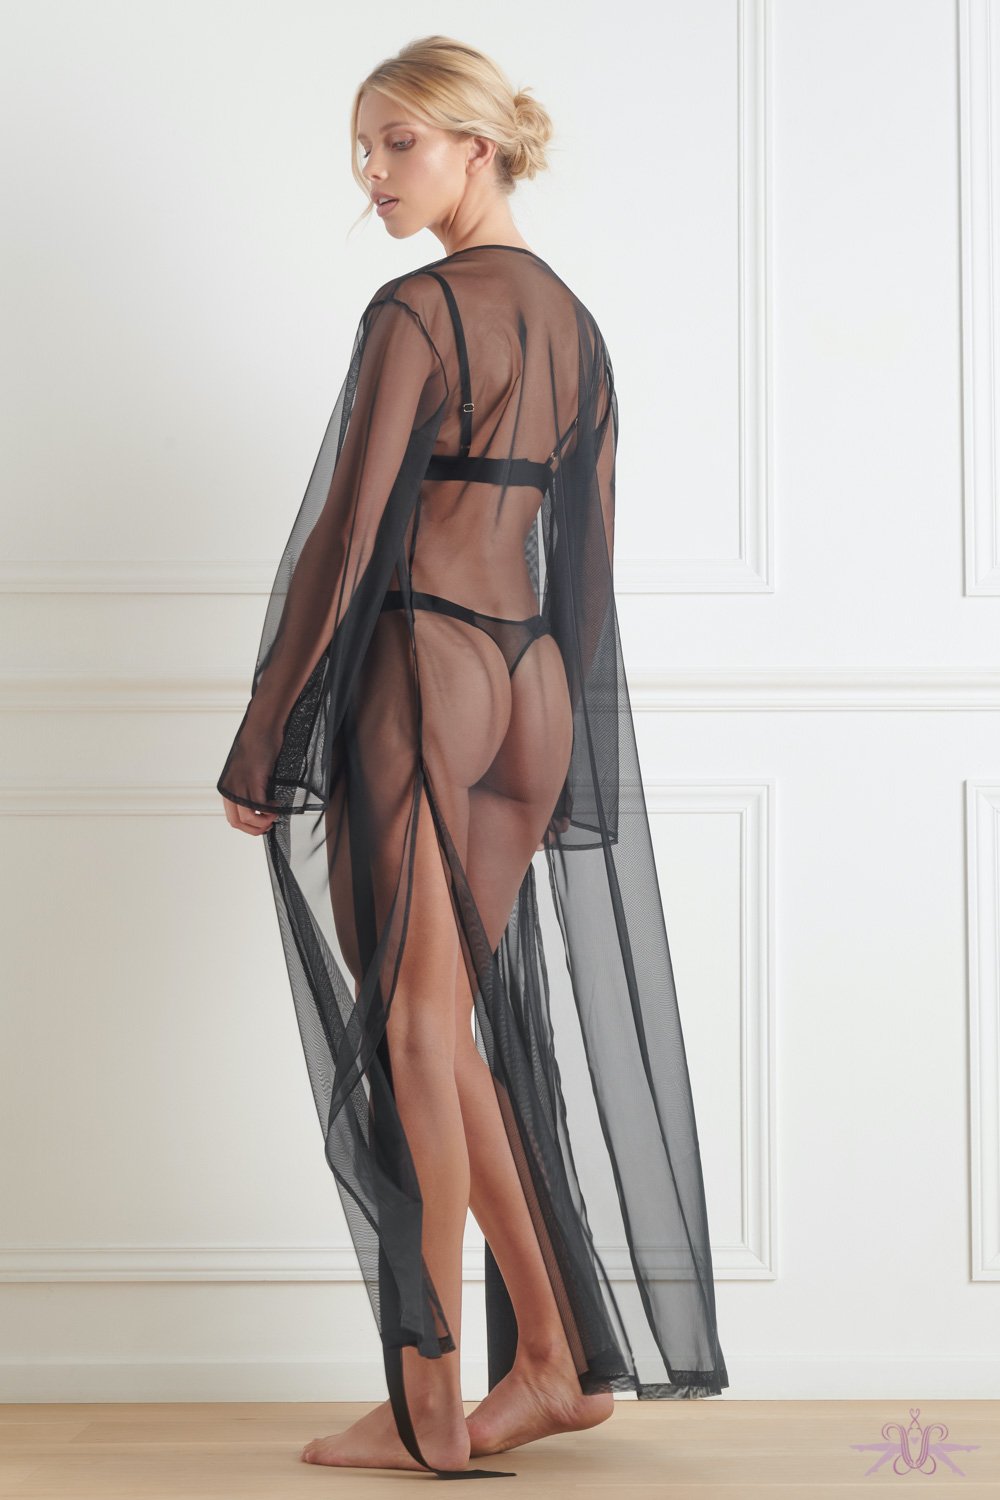 Maison Close Madame Reve Long Sheer Black Dress at the Hosiery Box  Nightwear - The Hosiery Box